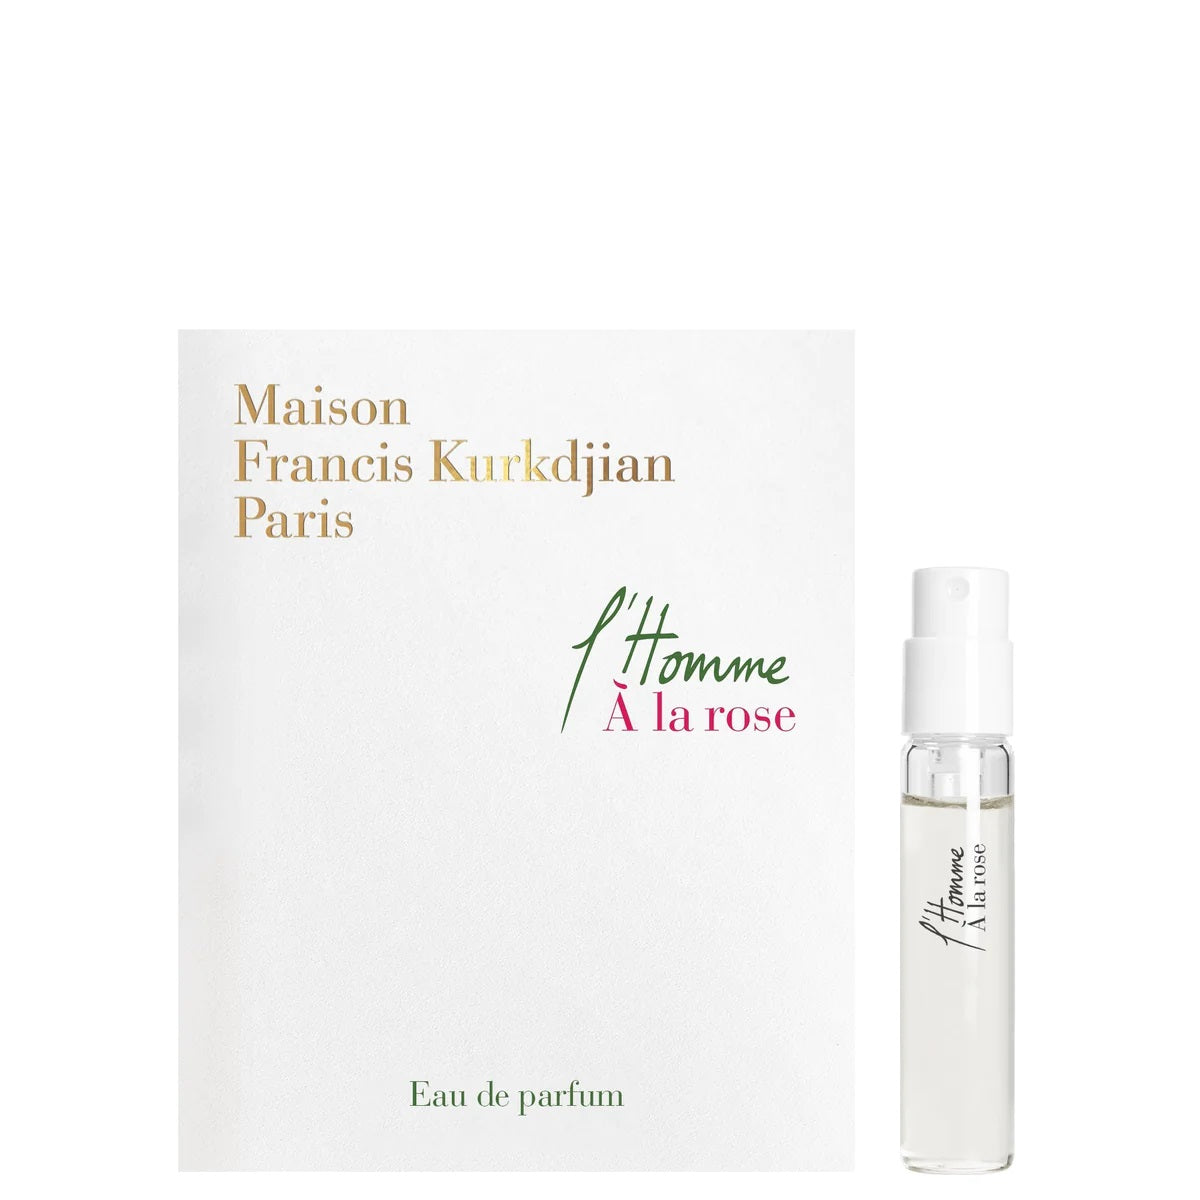 Maison Francis Kurkdjian L'Homme A la Rose 2 מ"ל 0.06 פל. עוז. דוגמאות ריח רשמיות